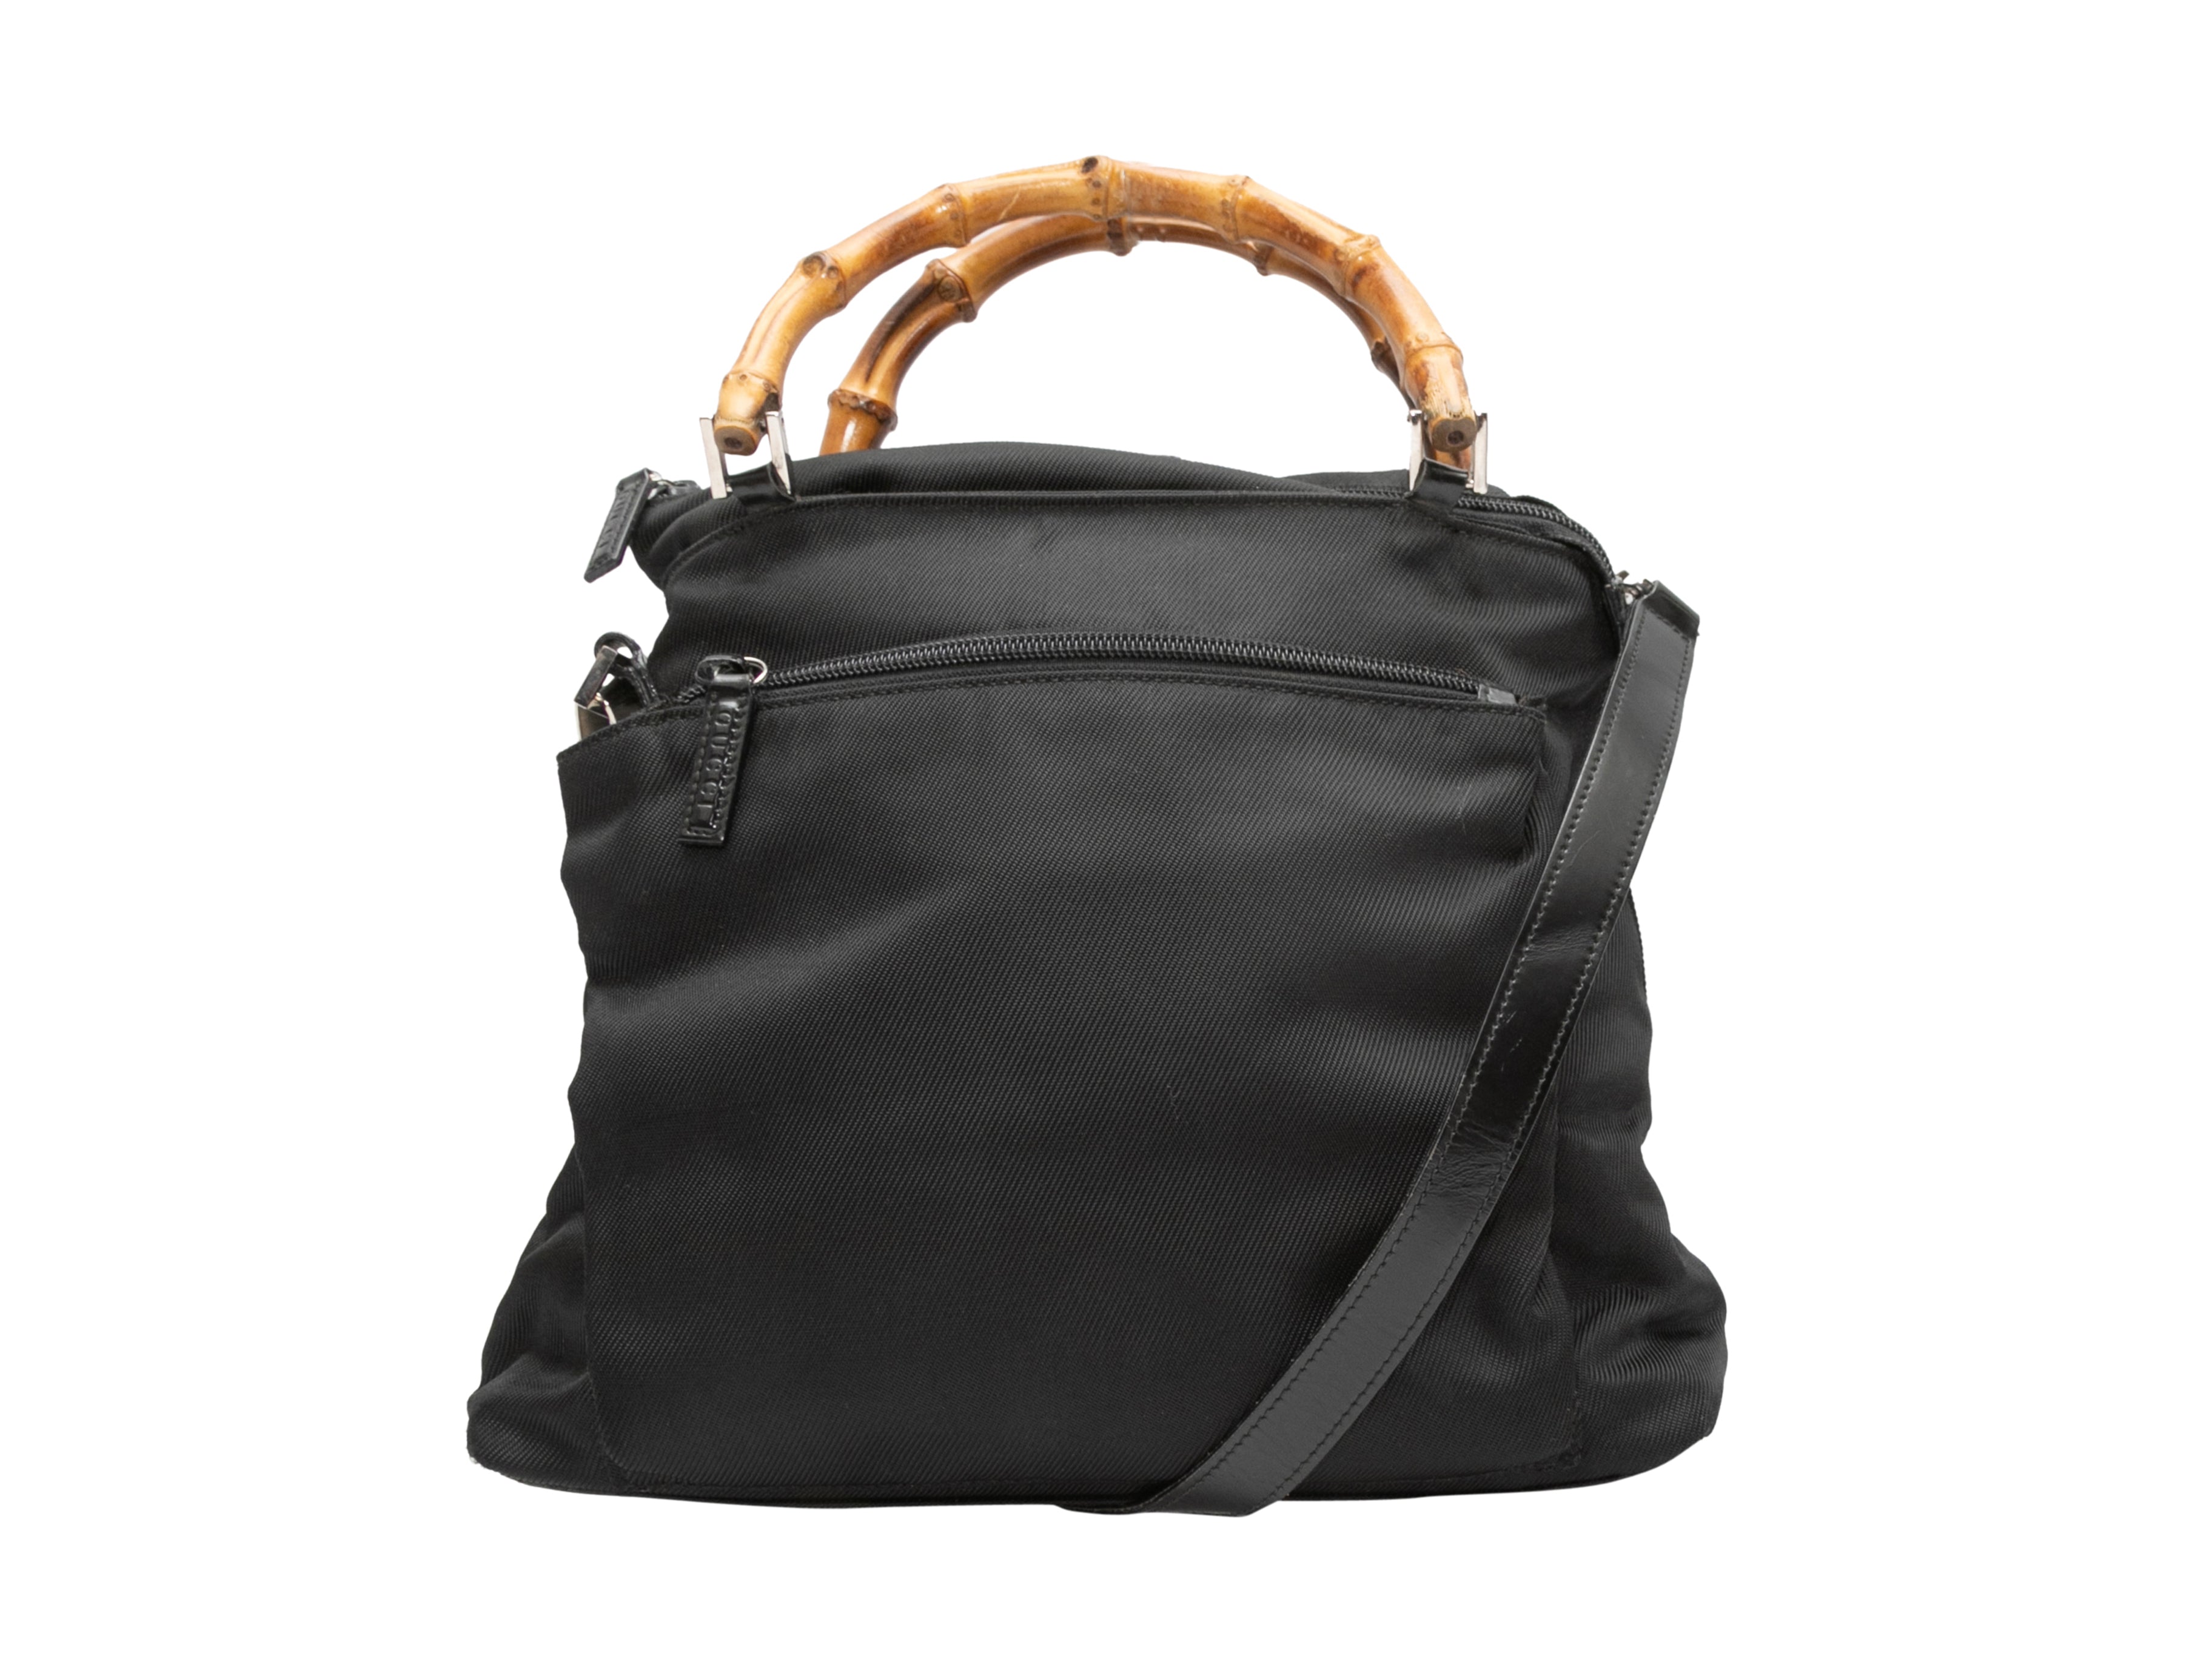 Gucci, Bags, Gucci Authentic Bamboo Black Zipper Purse Makeup Bag Travel